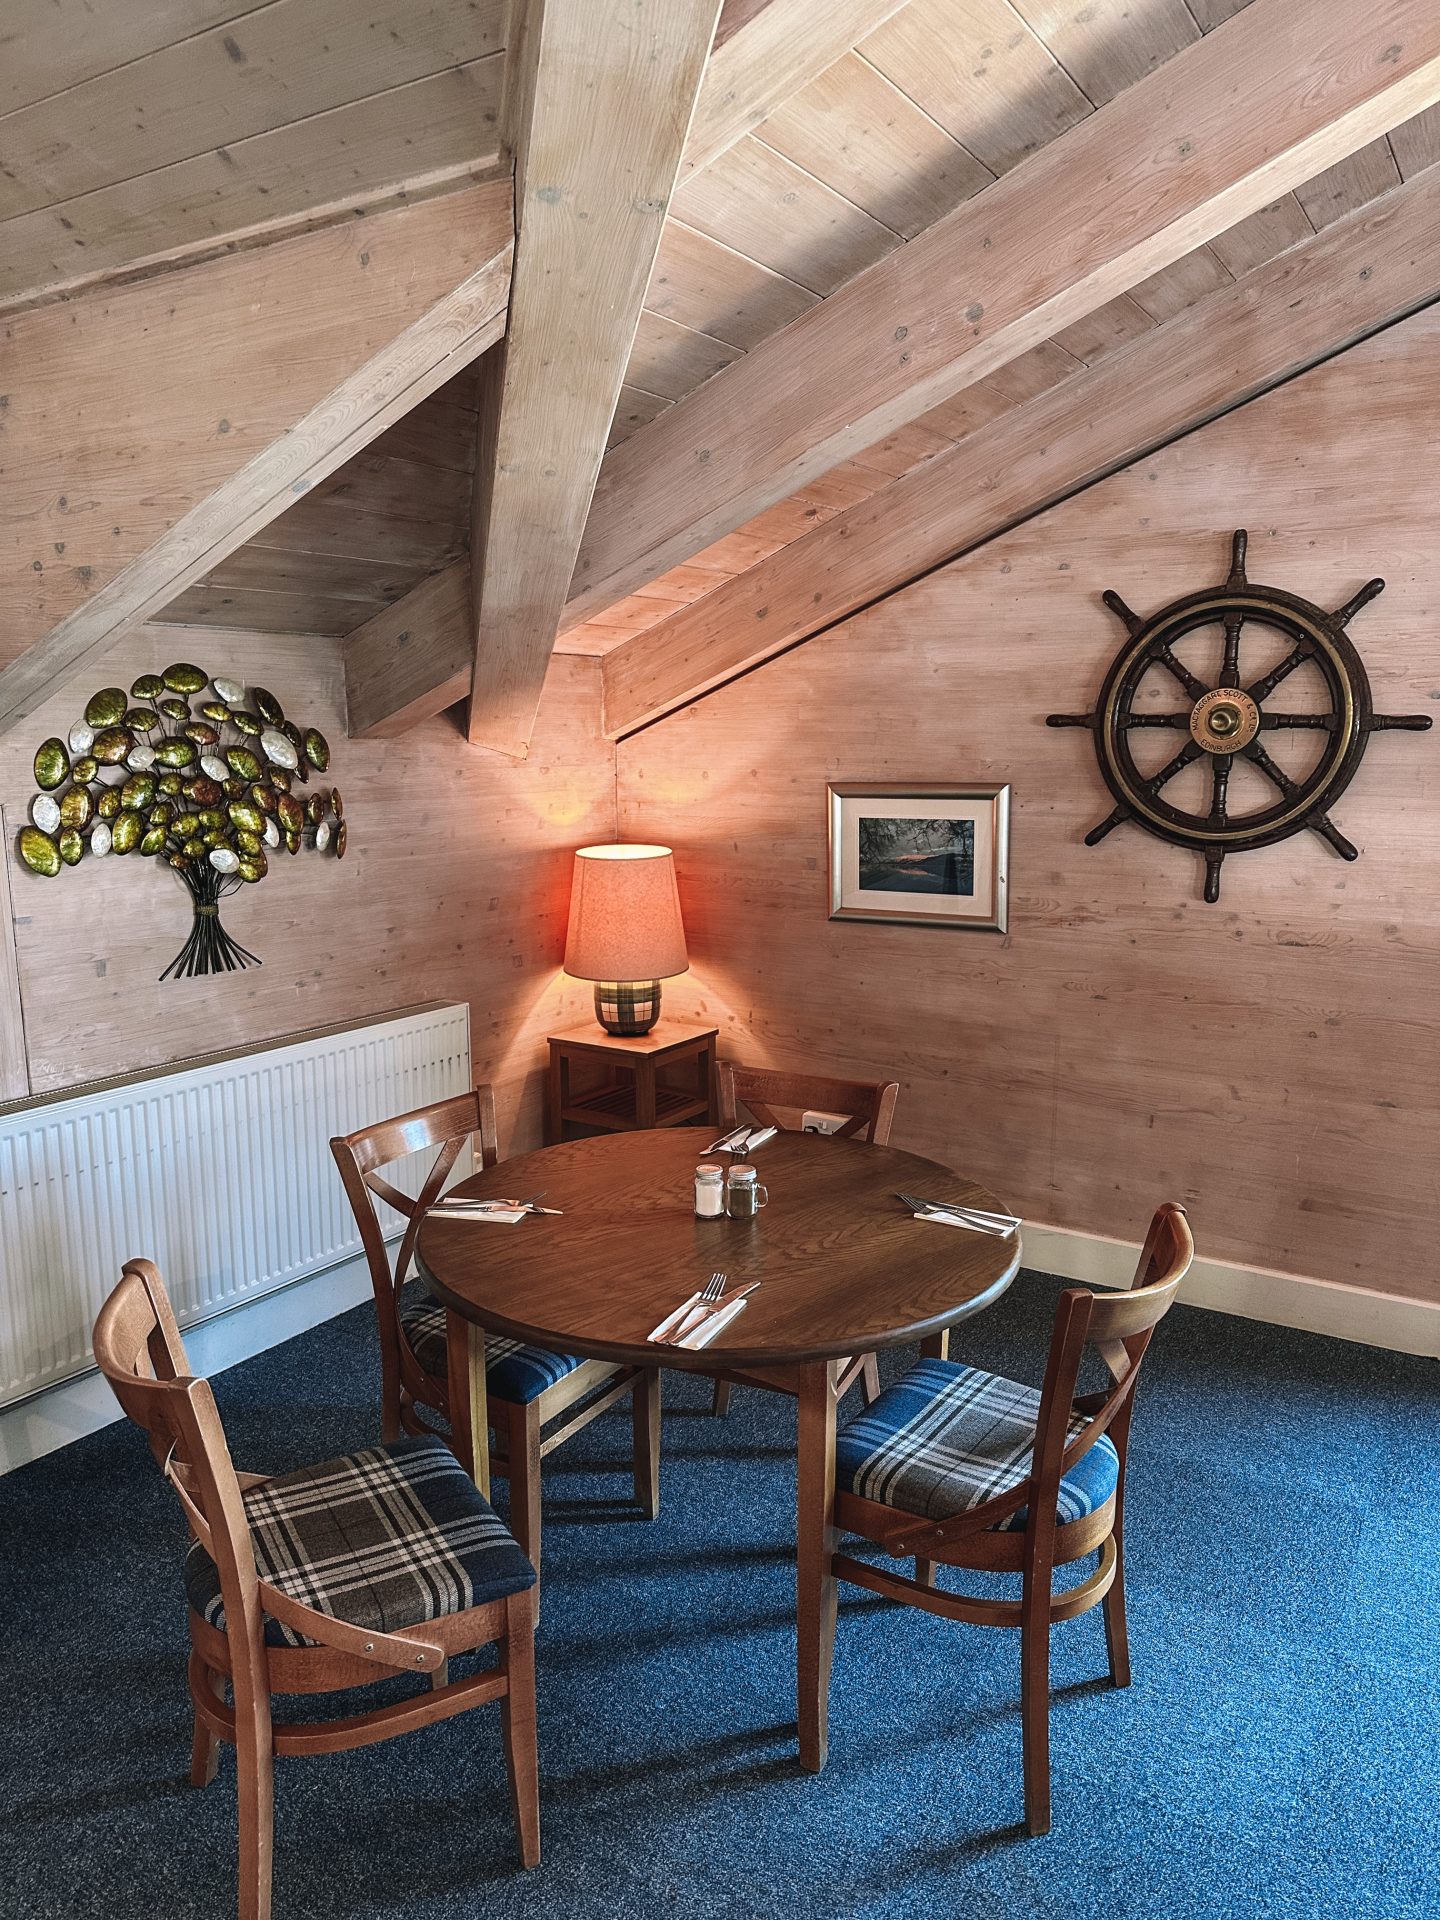 The Boathouse Restaurant, Fort Augustus, Scotland